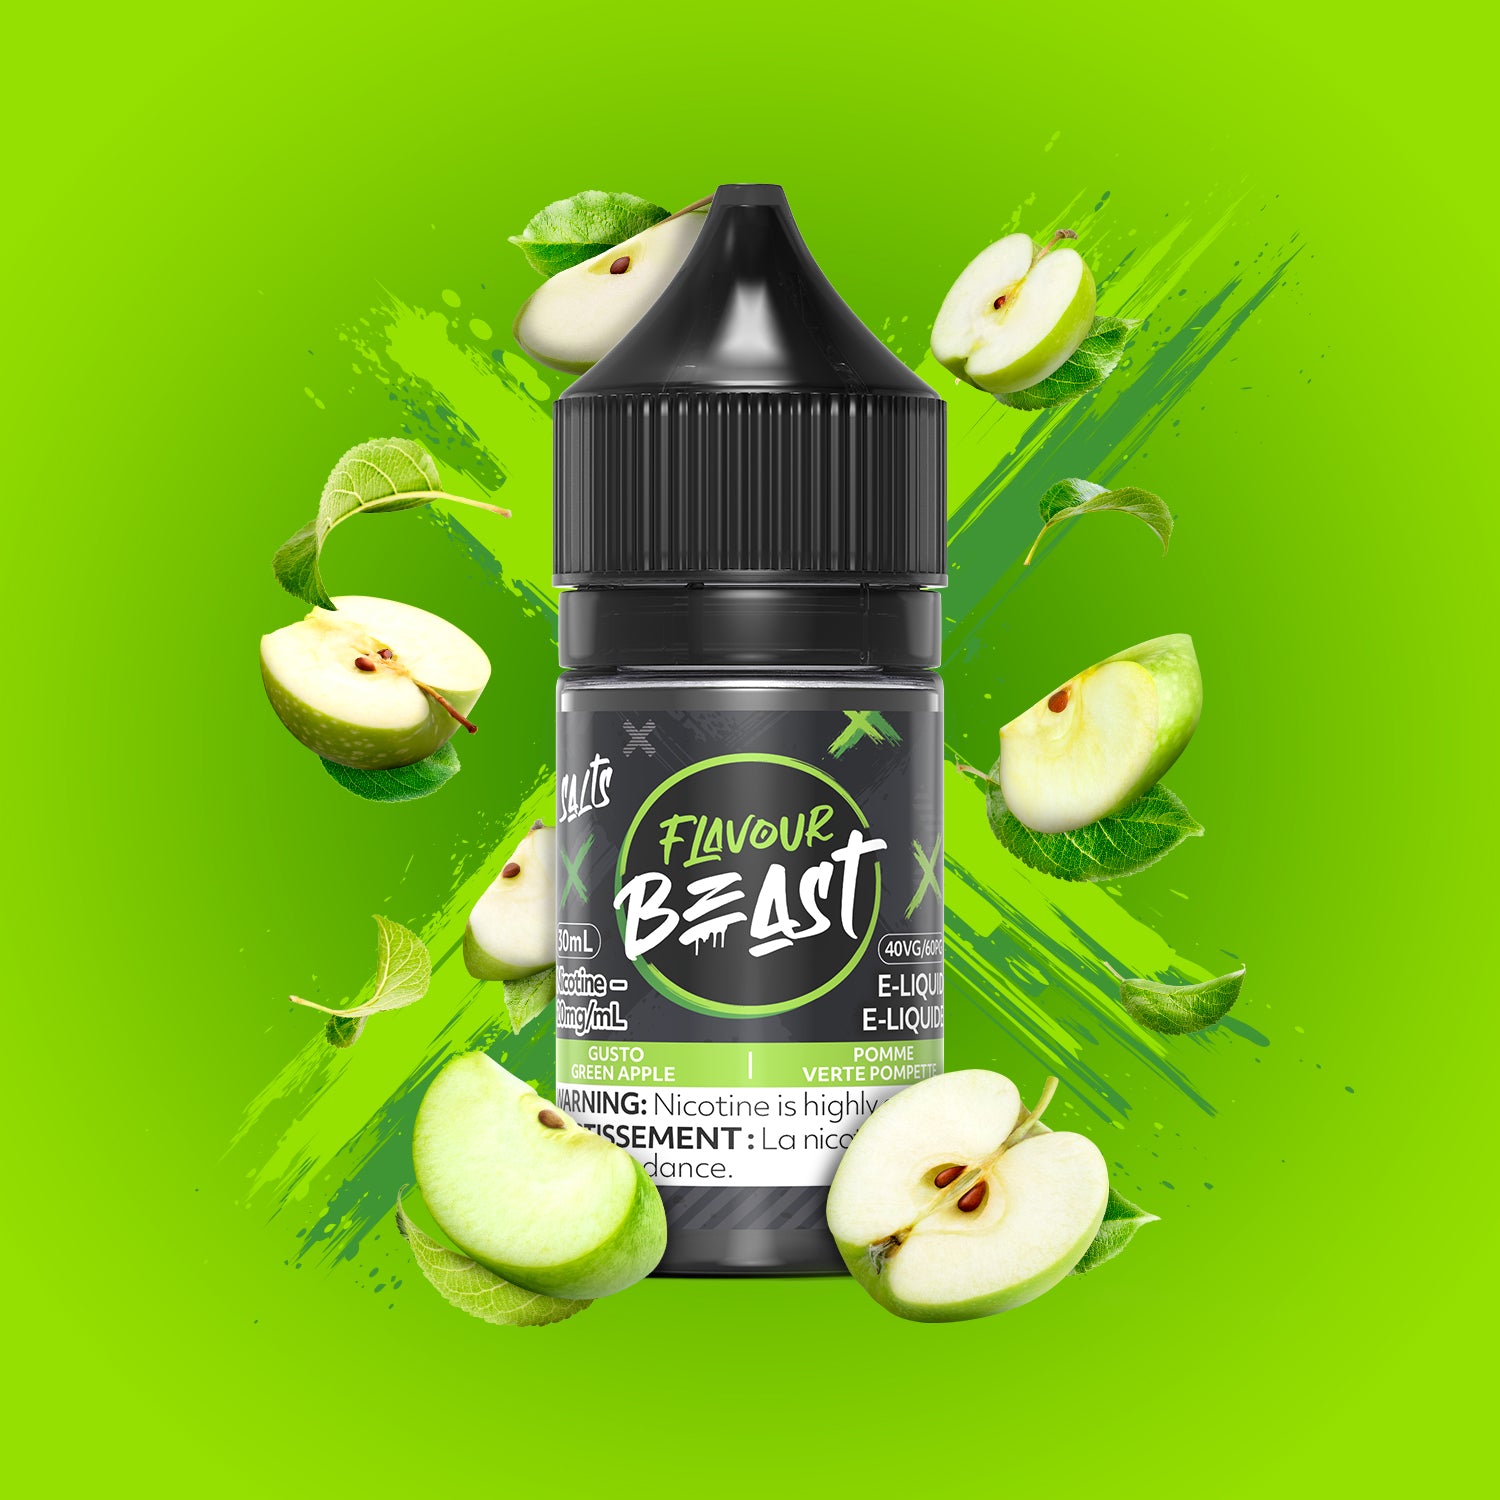 GUSTO GREEN APPLE - Flavour Beast E-Liquid - 30ml - EXCISED